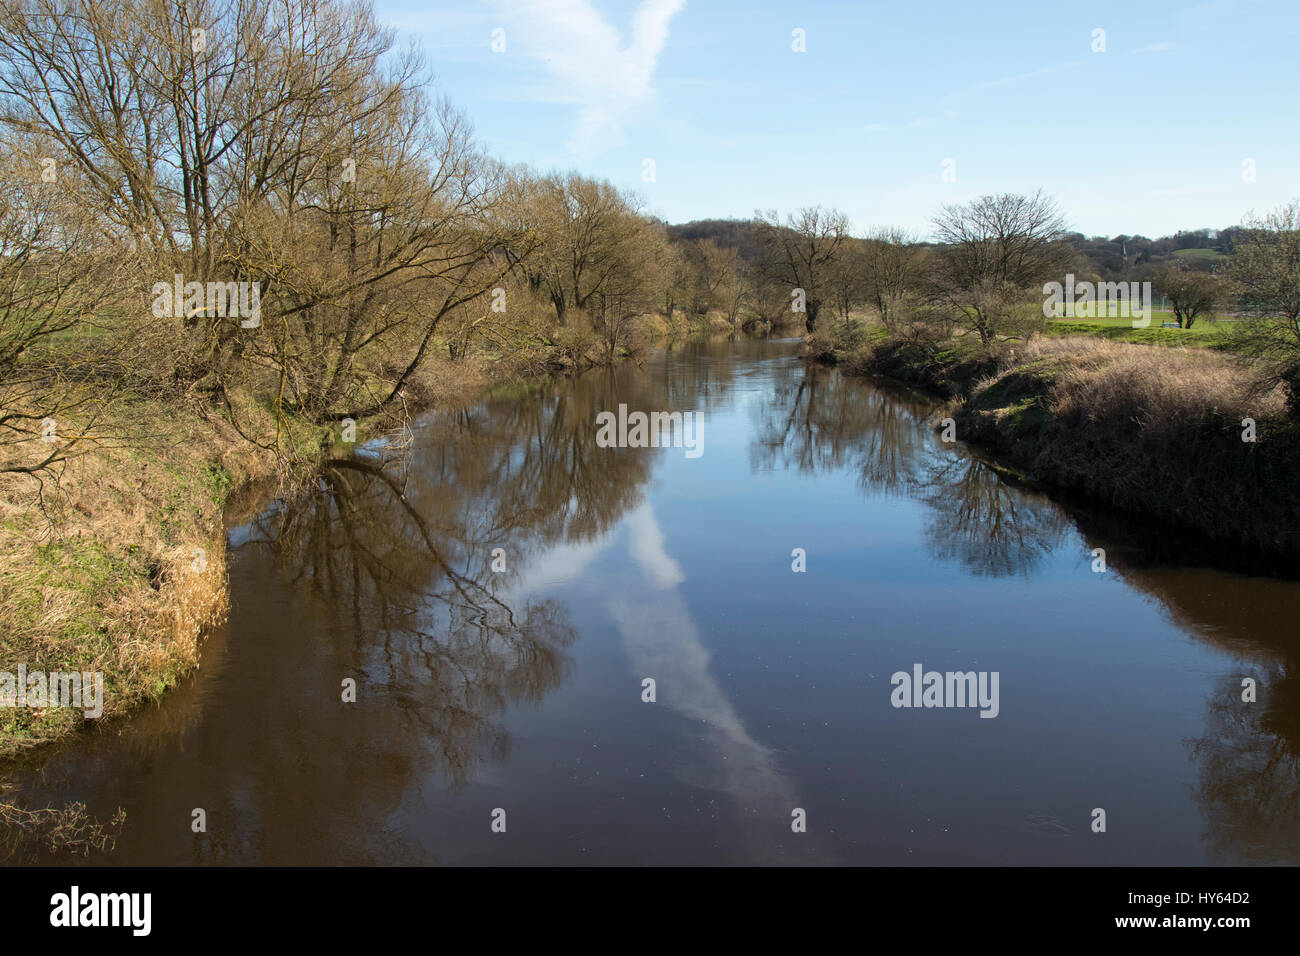 River Wear, Durham, UK Stock Photo, Royalty Free Image: 137203502 - Alamy